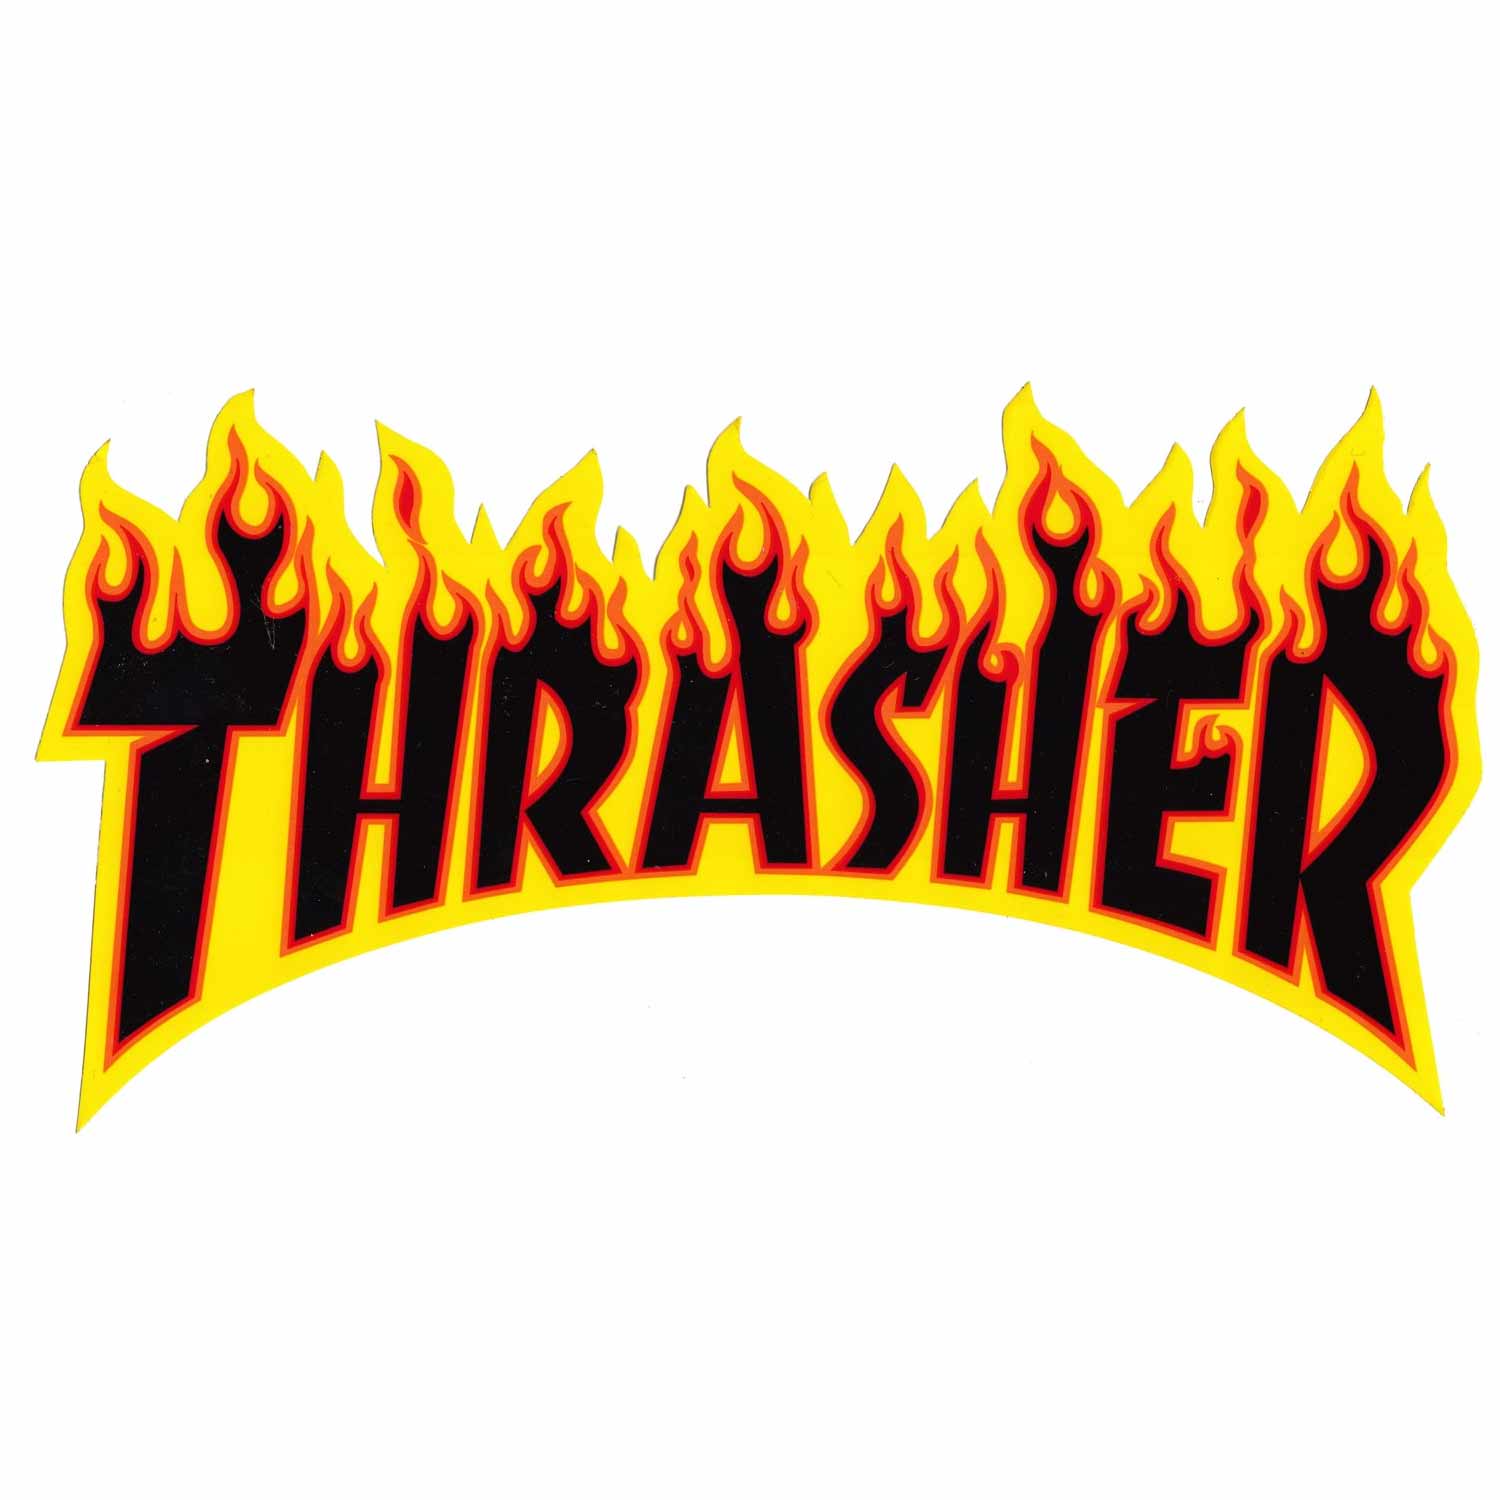 Cool Thrasher Logo - Thrasher Large Flames Sticker 5.5'' x 10.25'' Fire